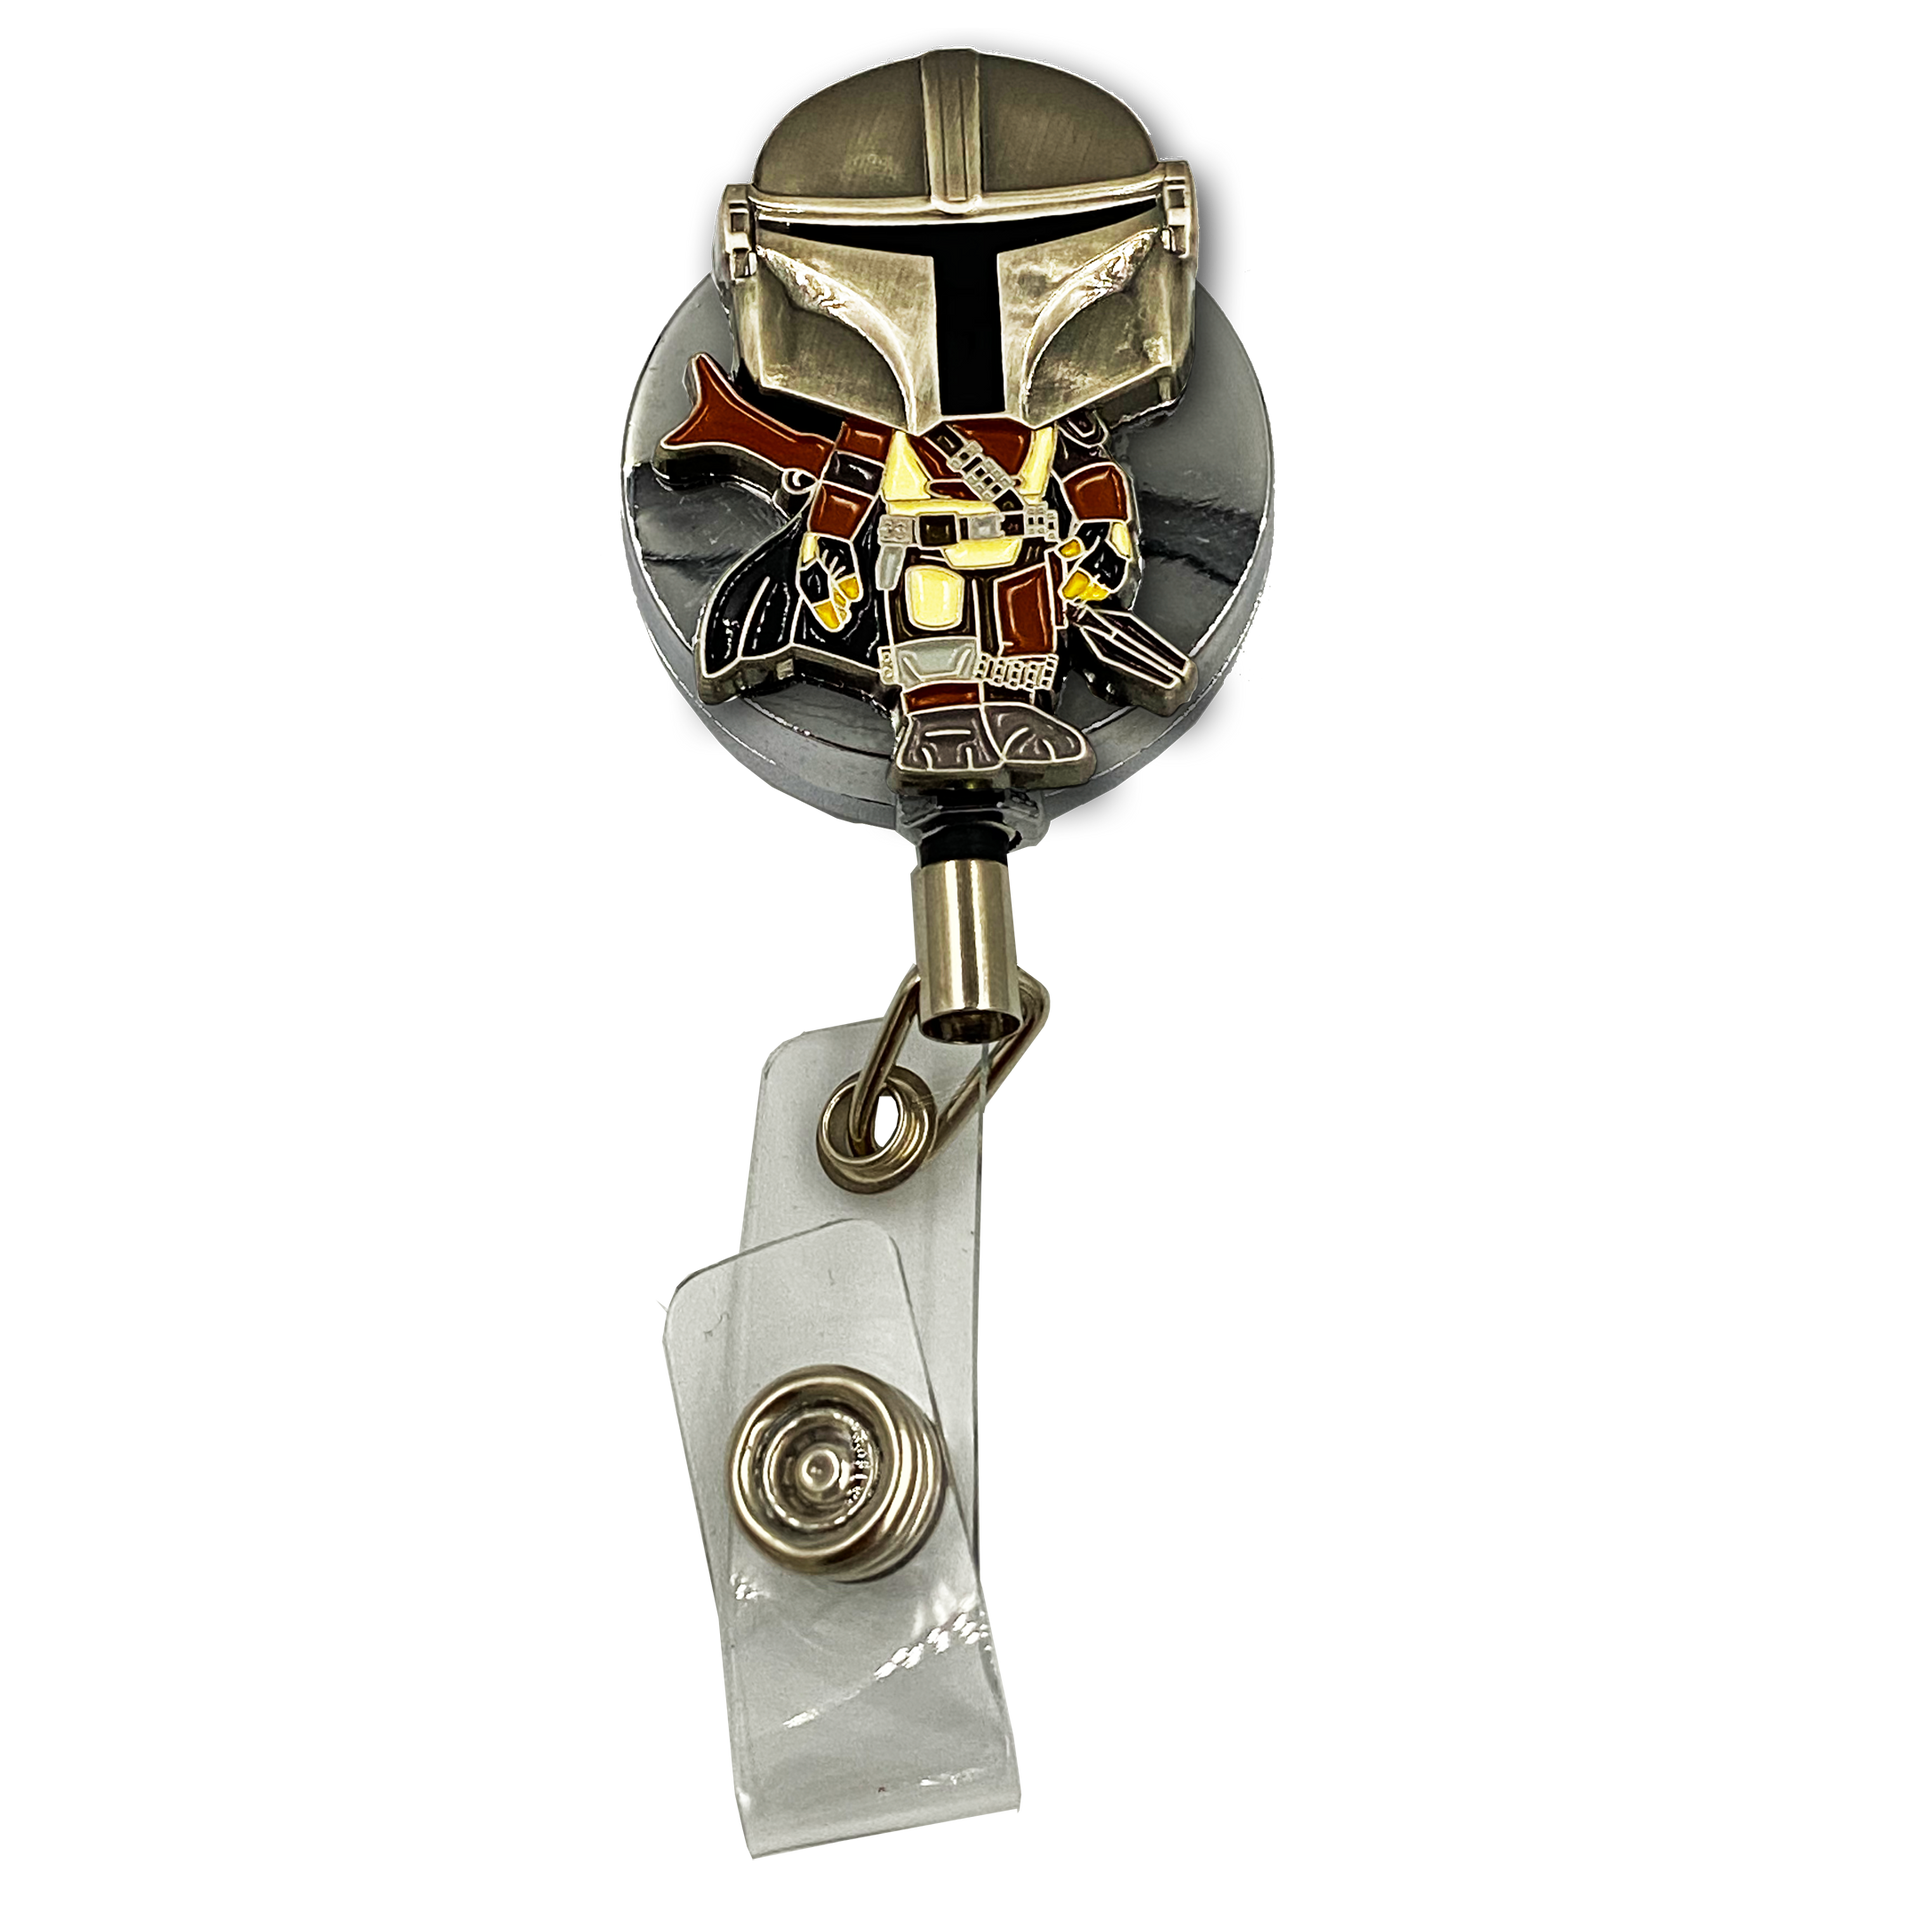 Star Wars, Rebel Alliance - Retractable Badge Holder - Badge Reel